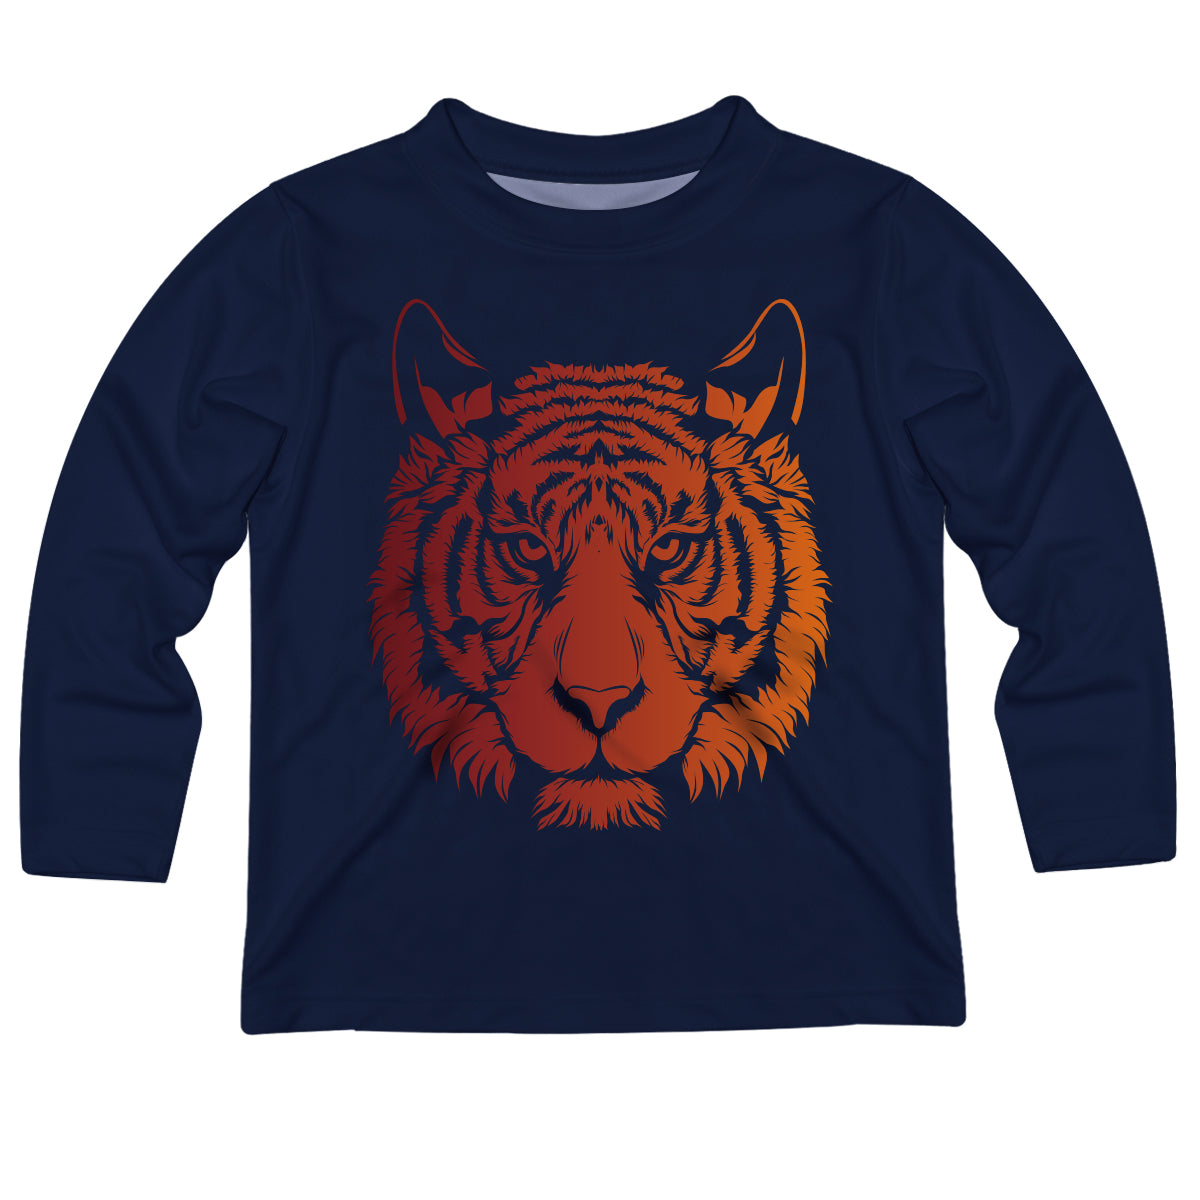 Tiger Face Navy Long Sleeve Tee Shirt - Wimziy&Co.